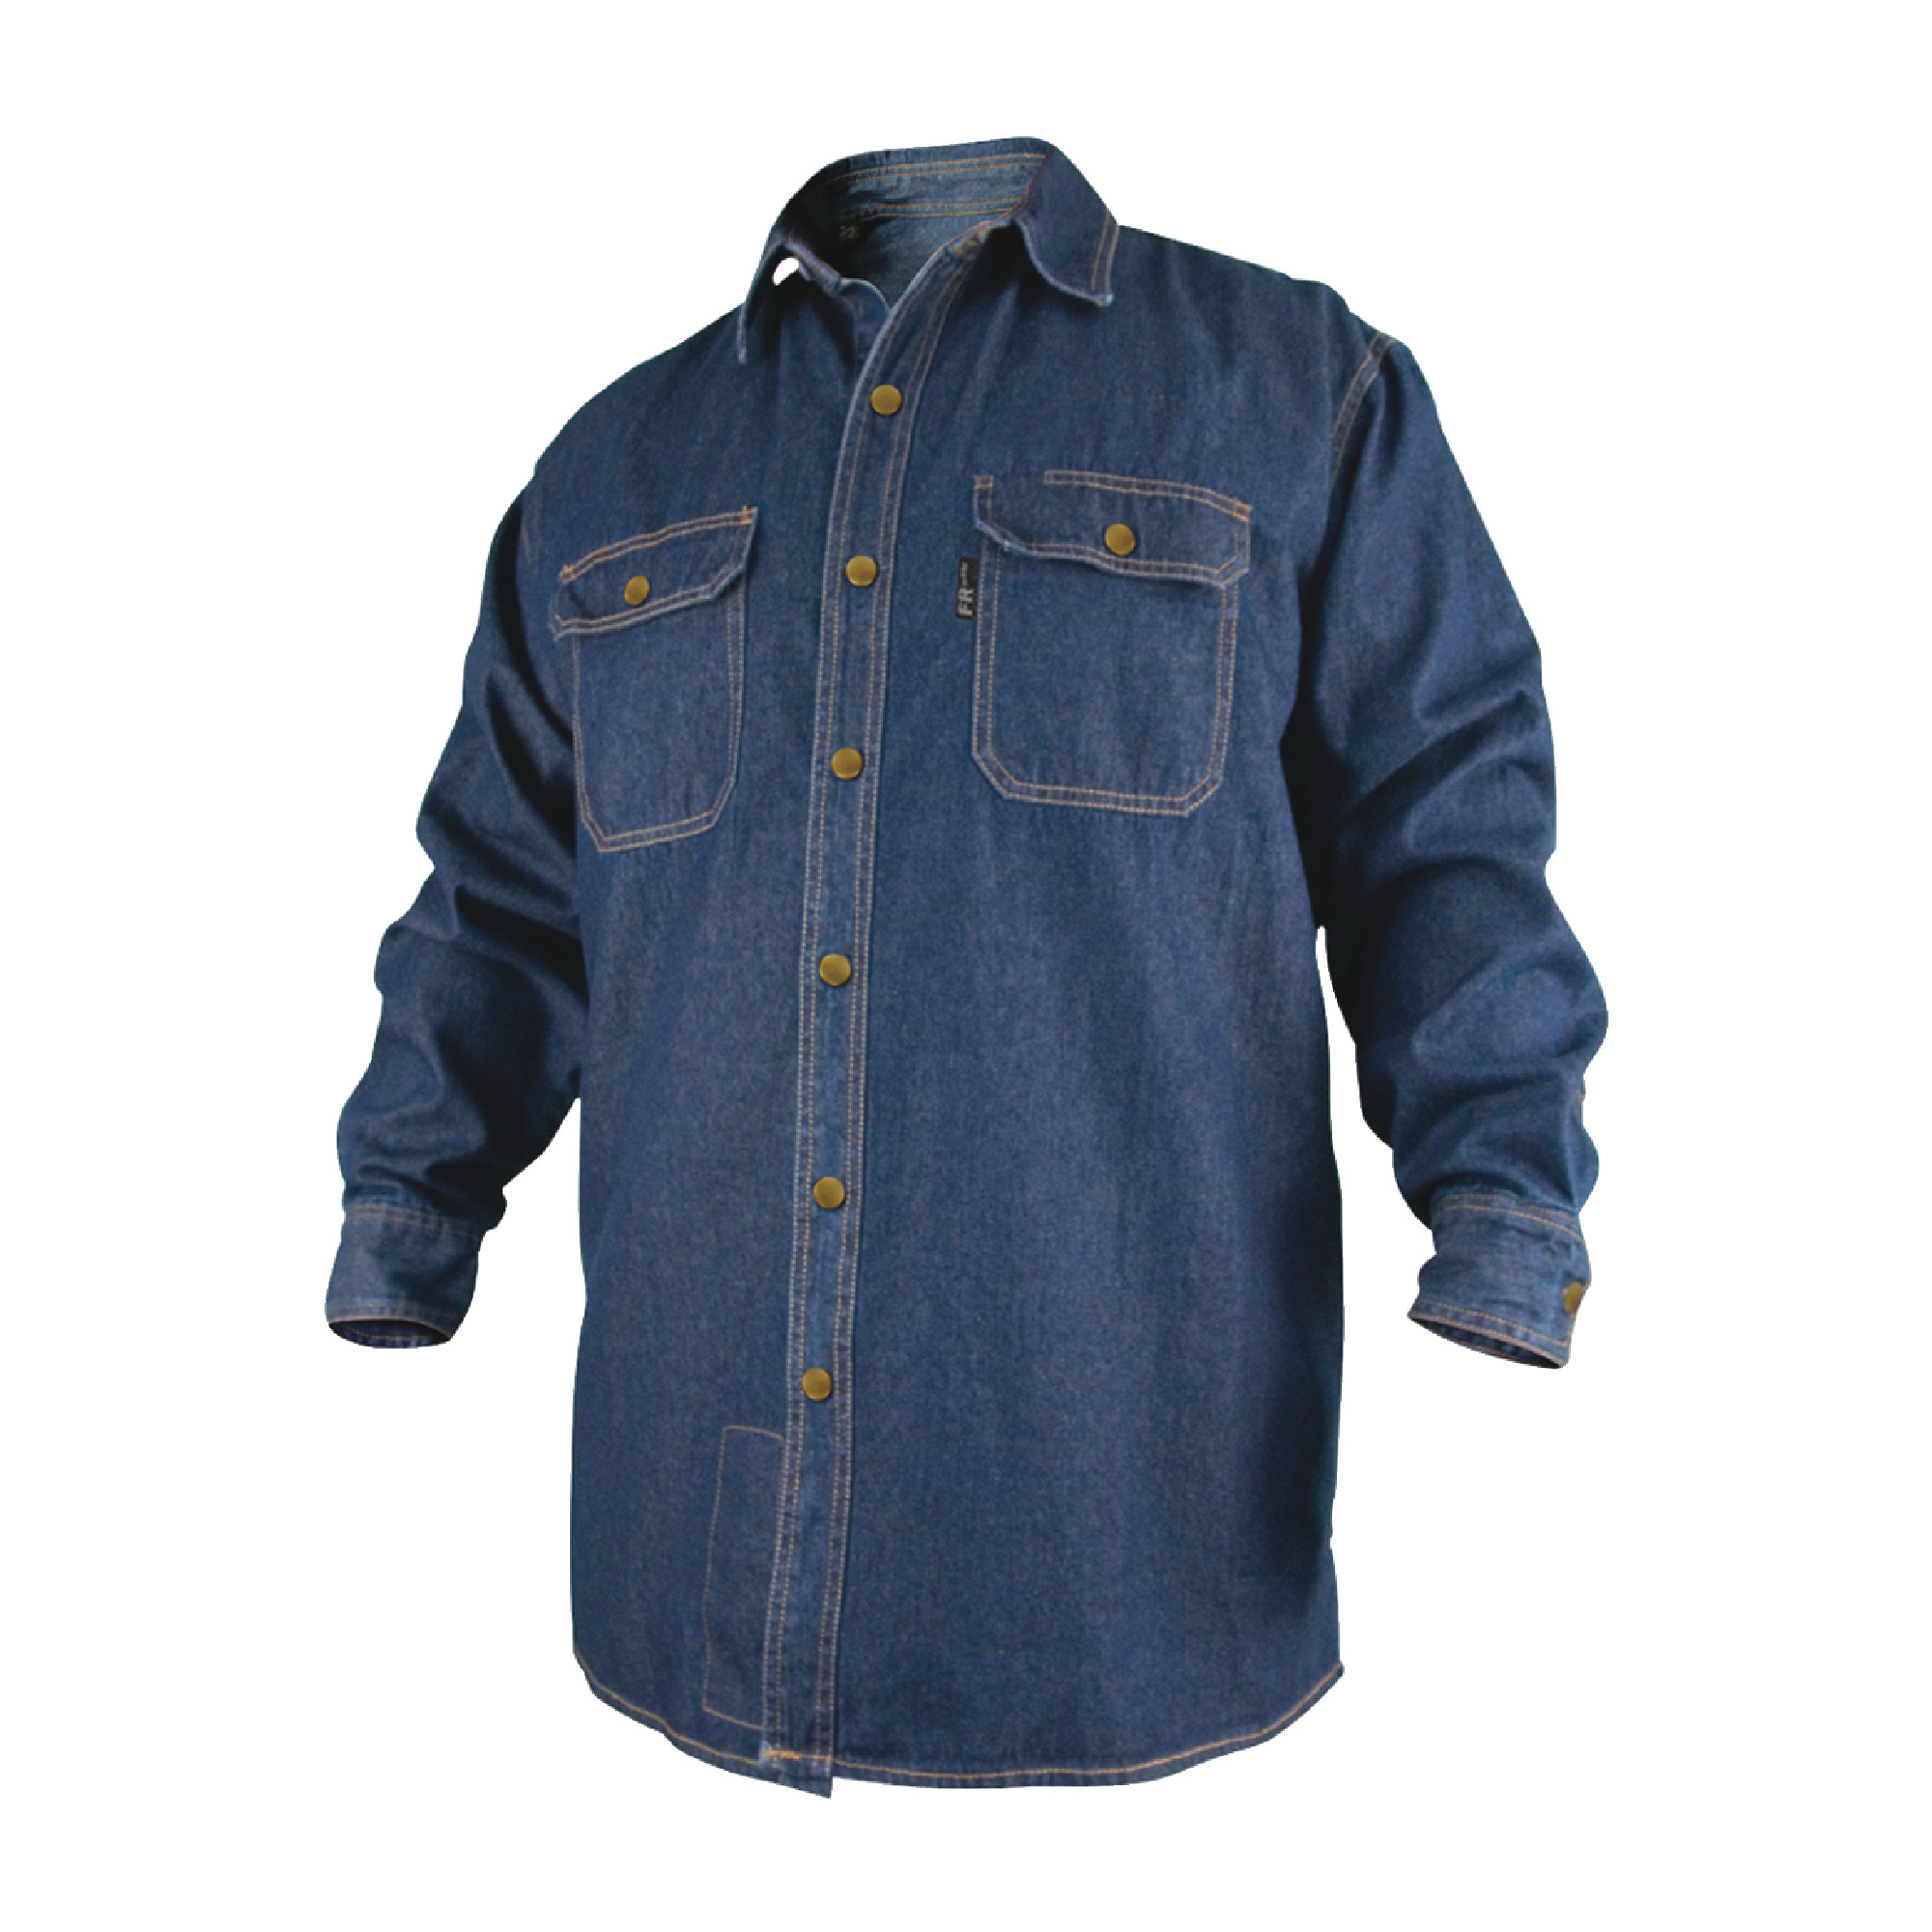 Black Stallion Denim Fire Resistant Cotton Welding Shirt - Size XL